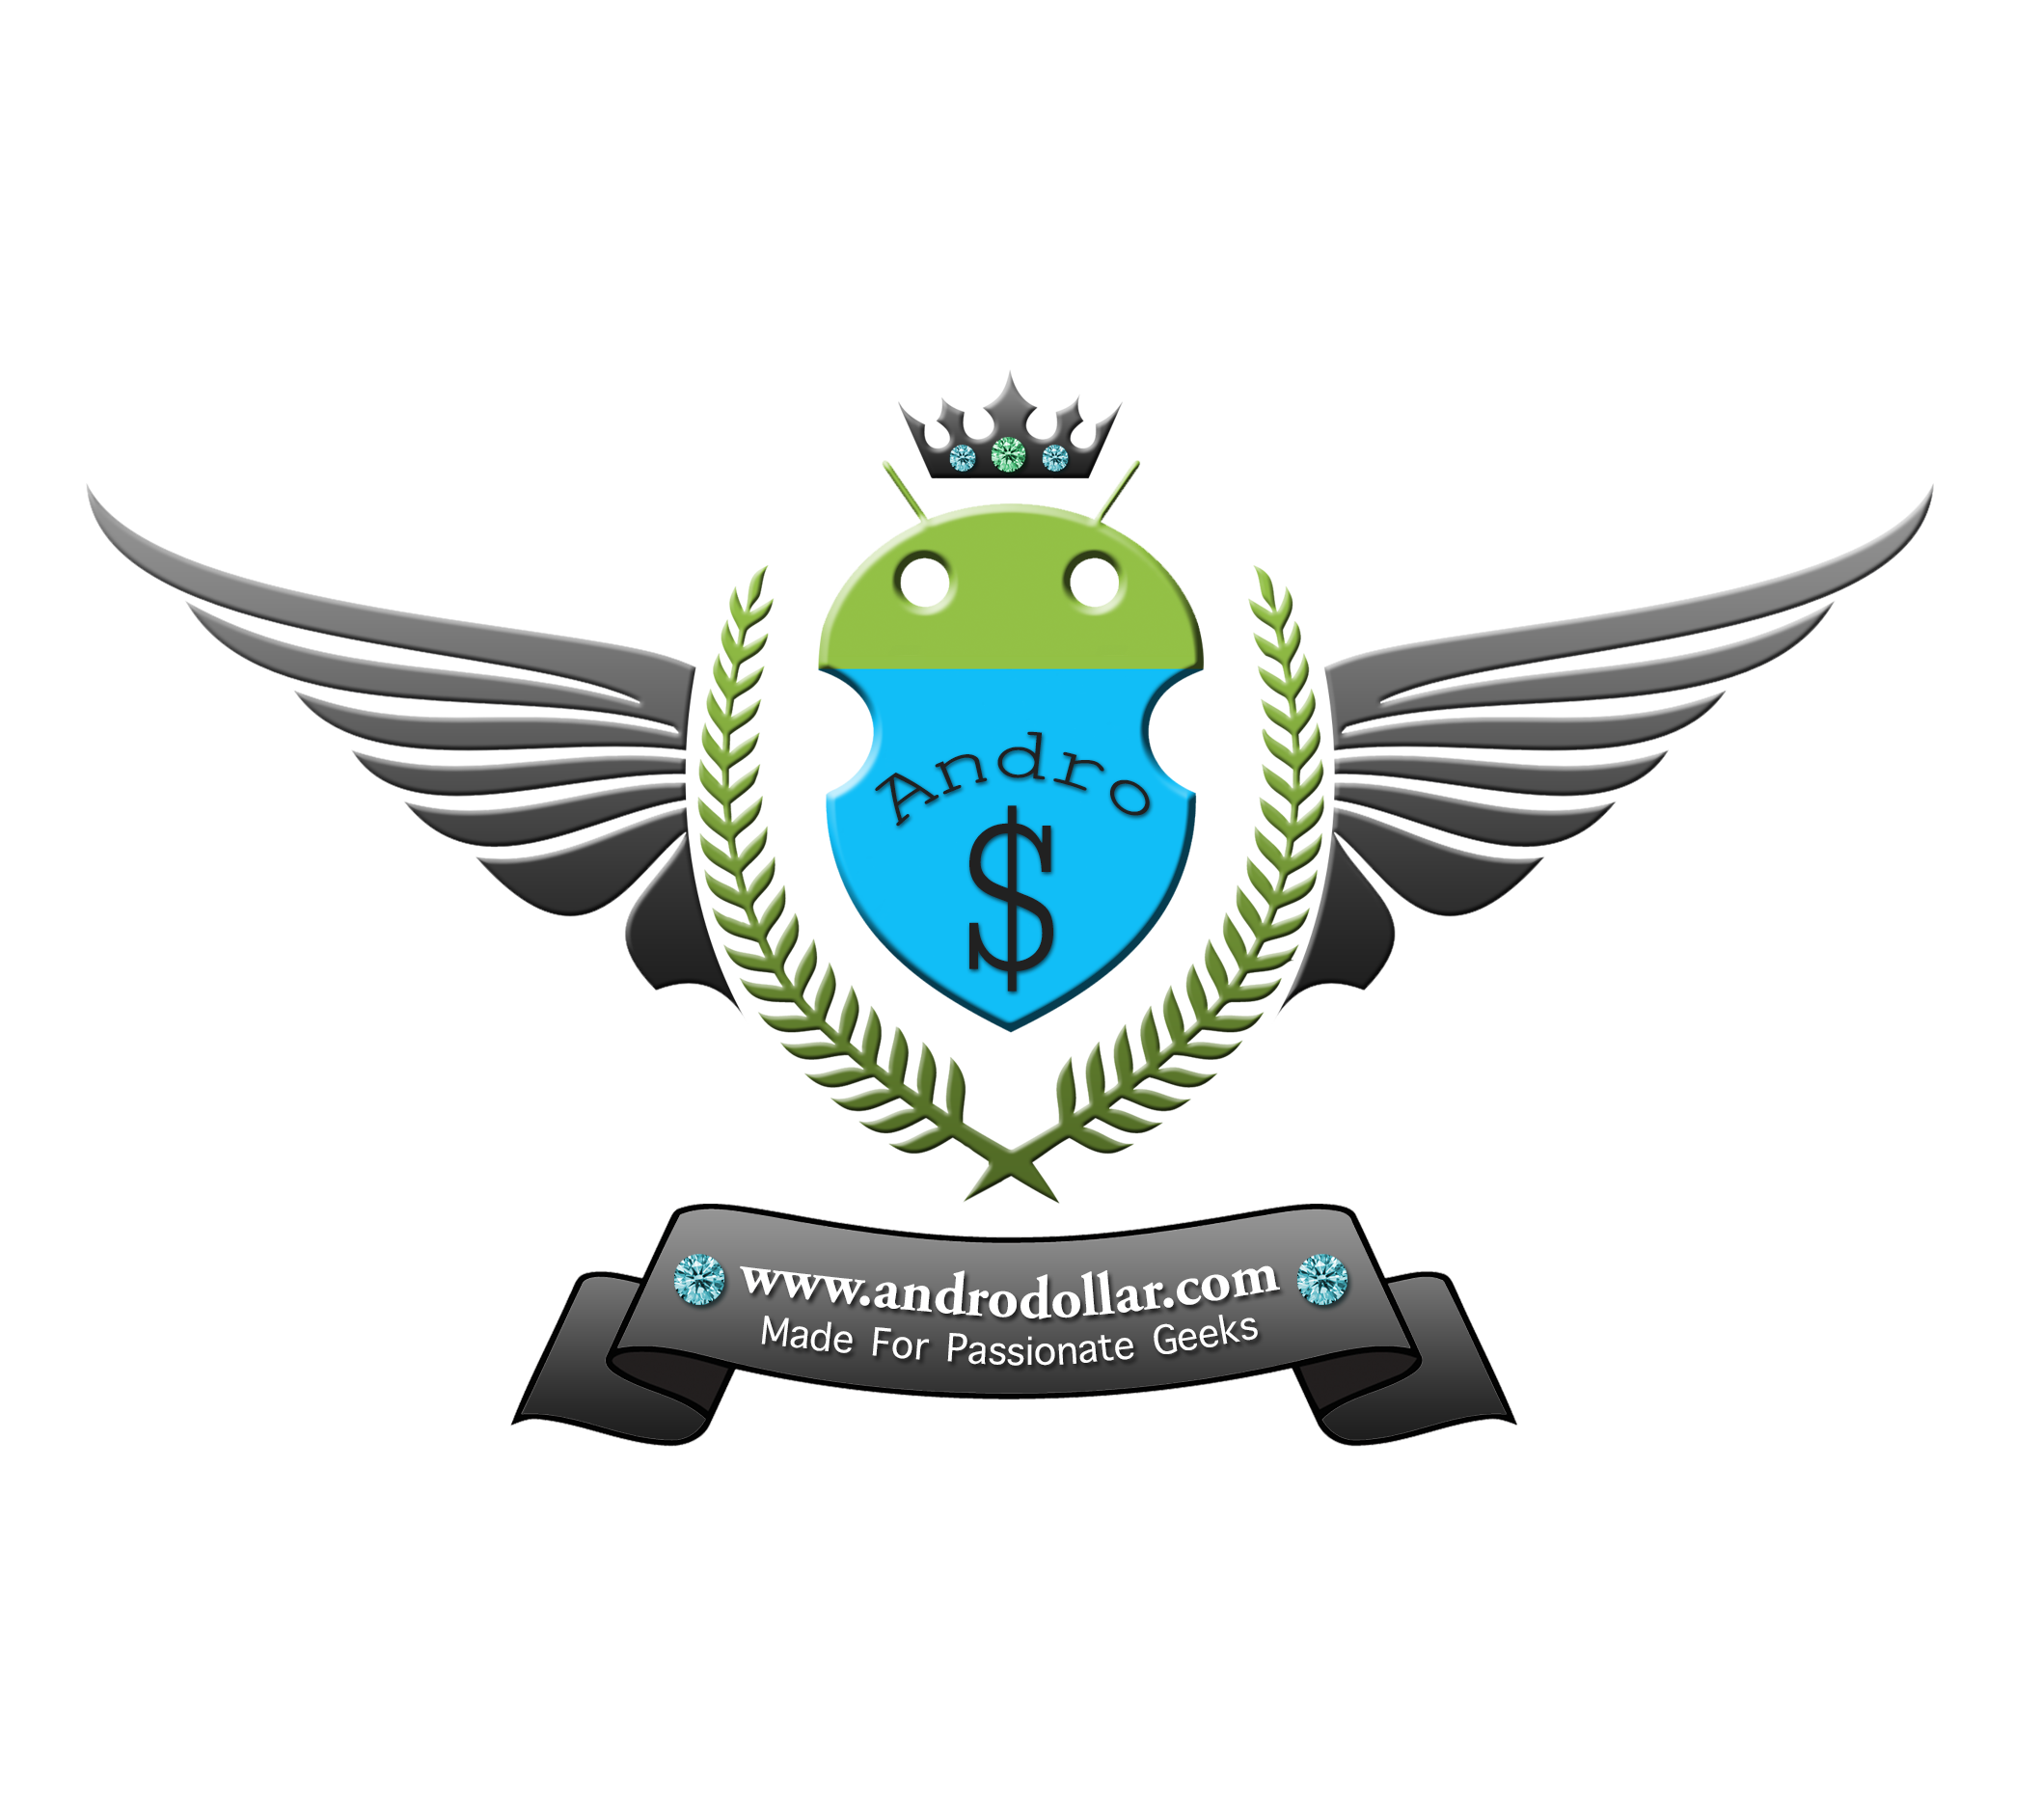 ANDRO DOLLAR LOGO - NEW Andro Dollar Logo